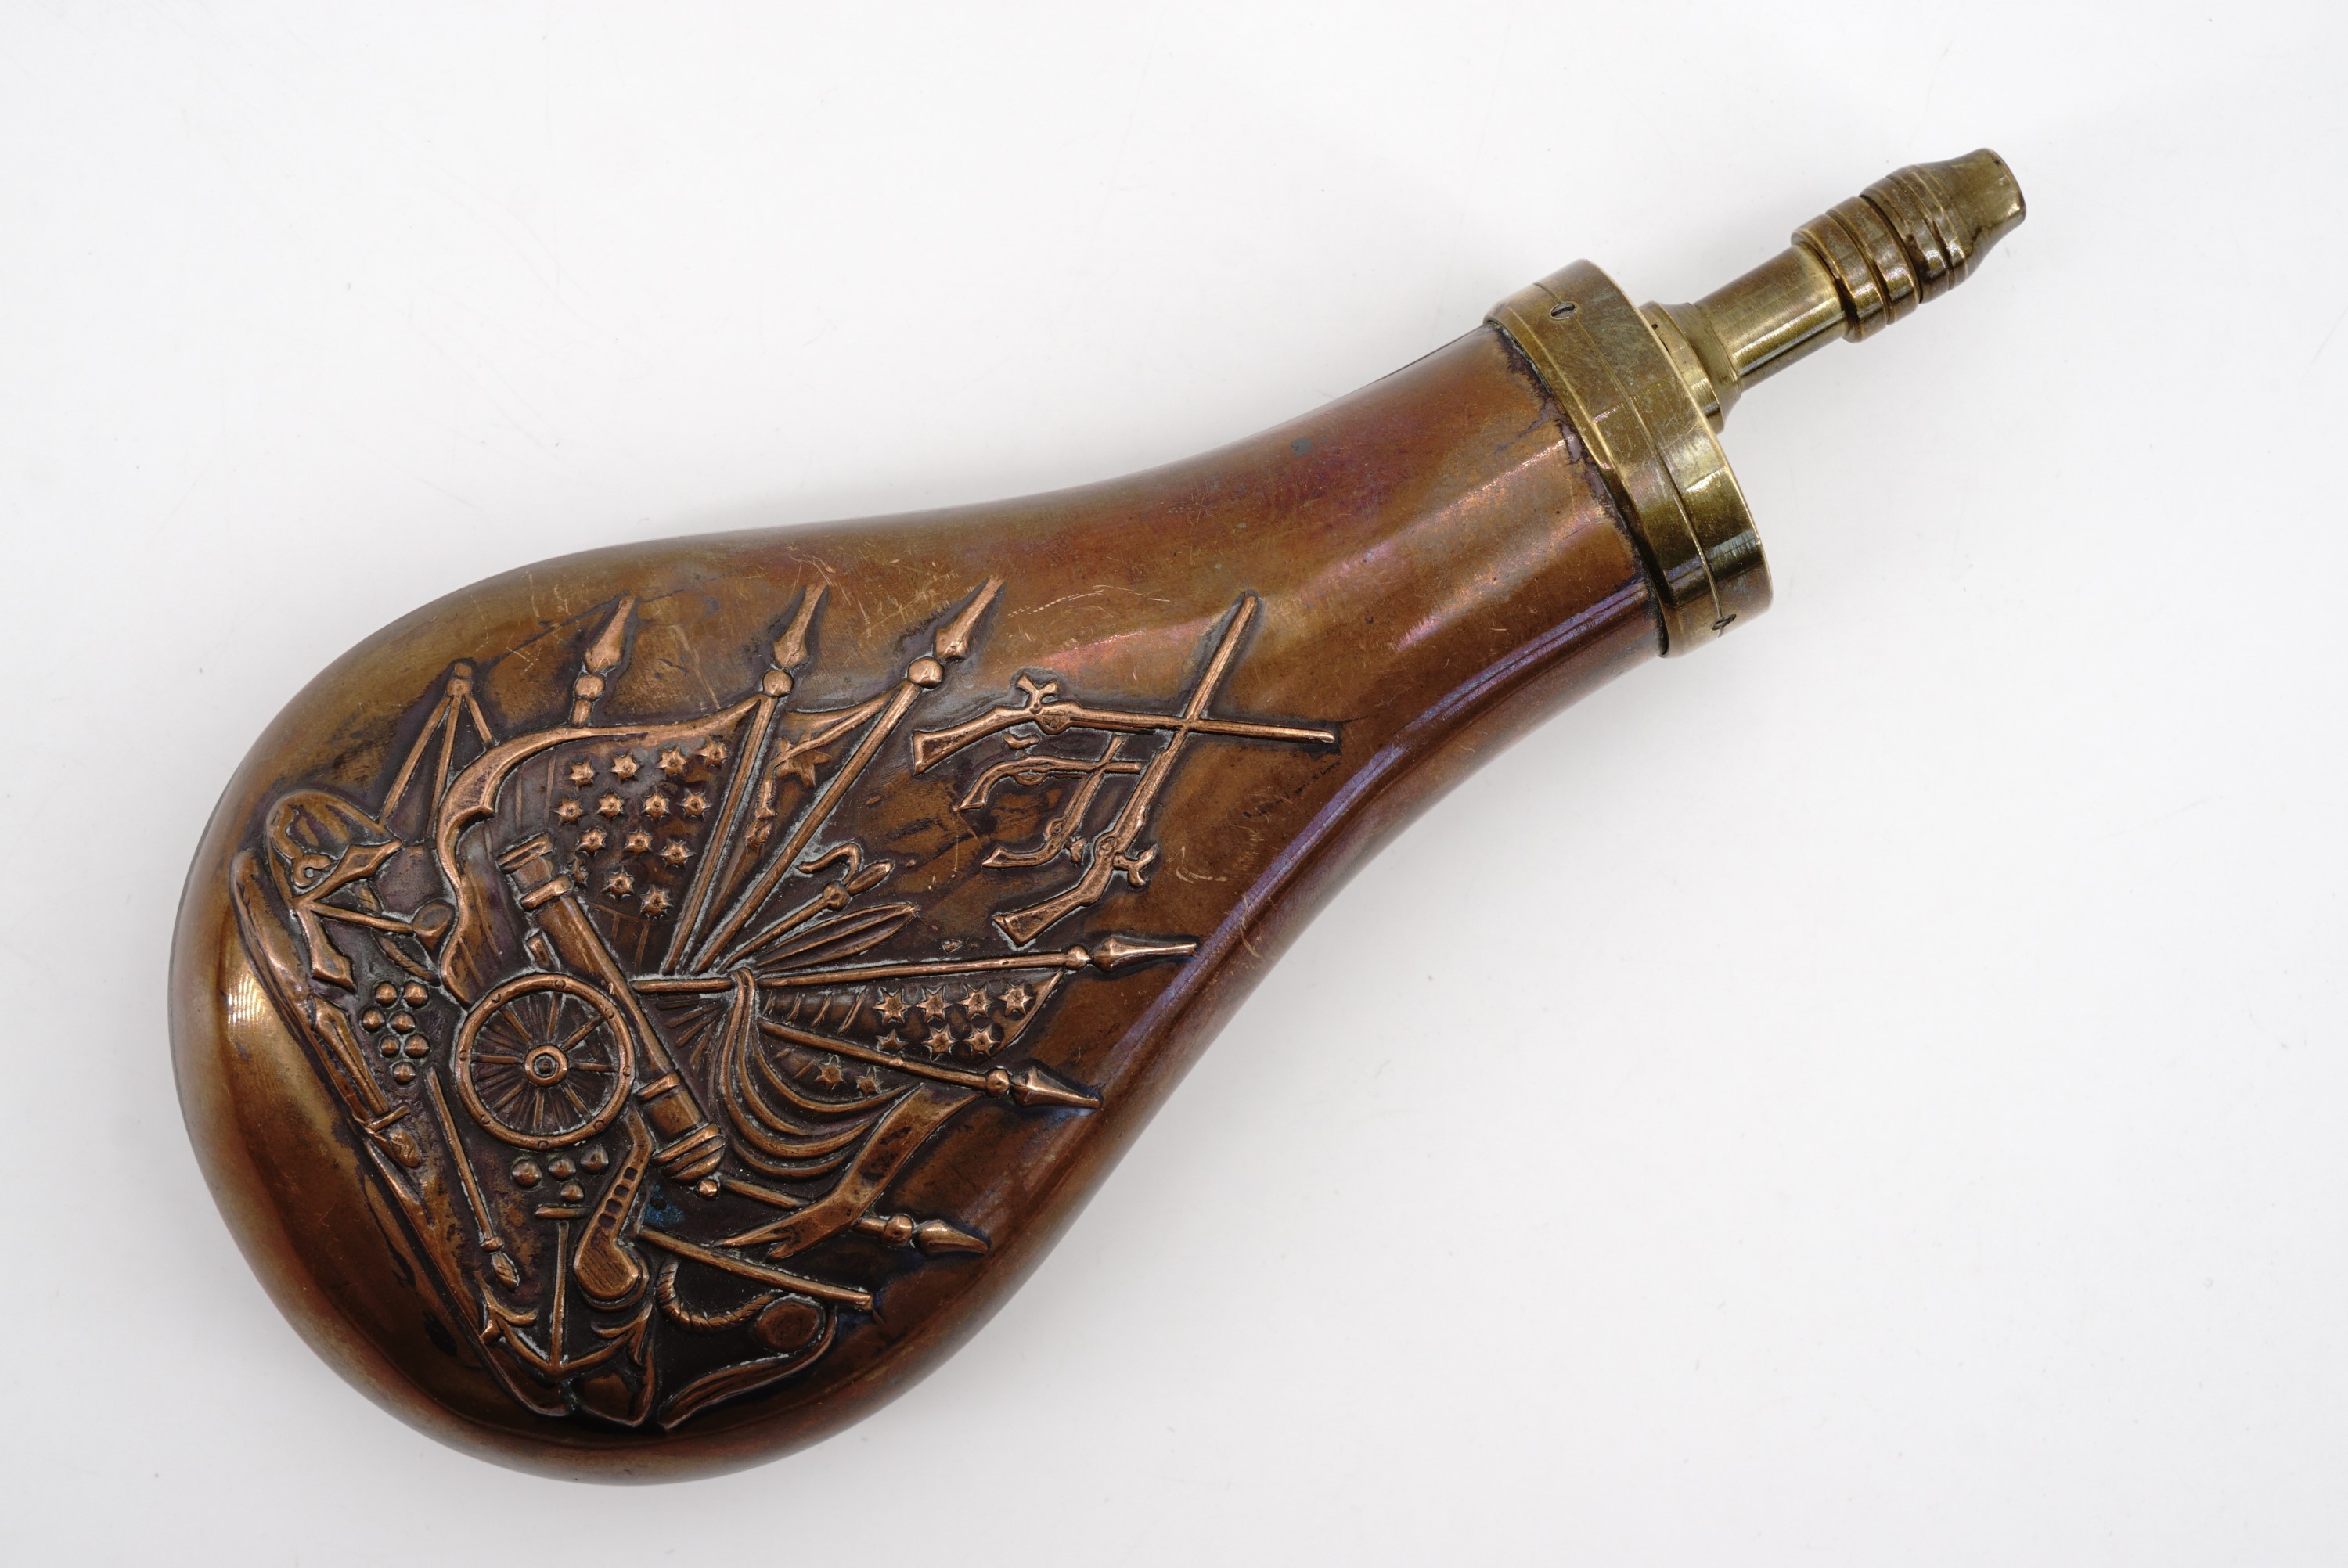 A reproduction Colt's patent powder flask